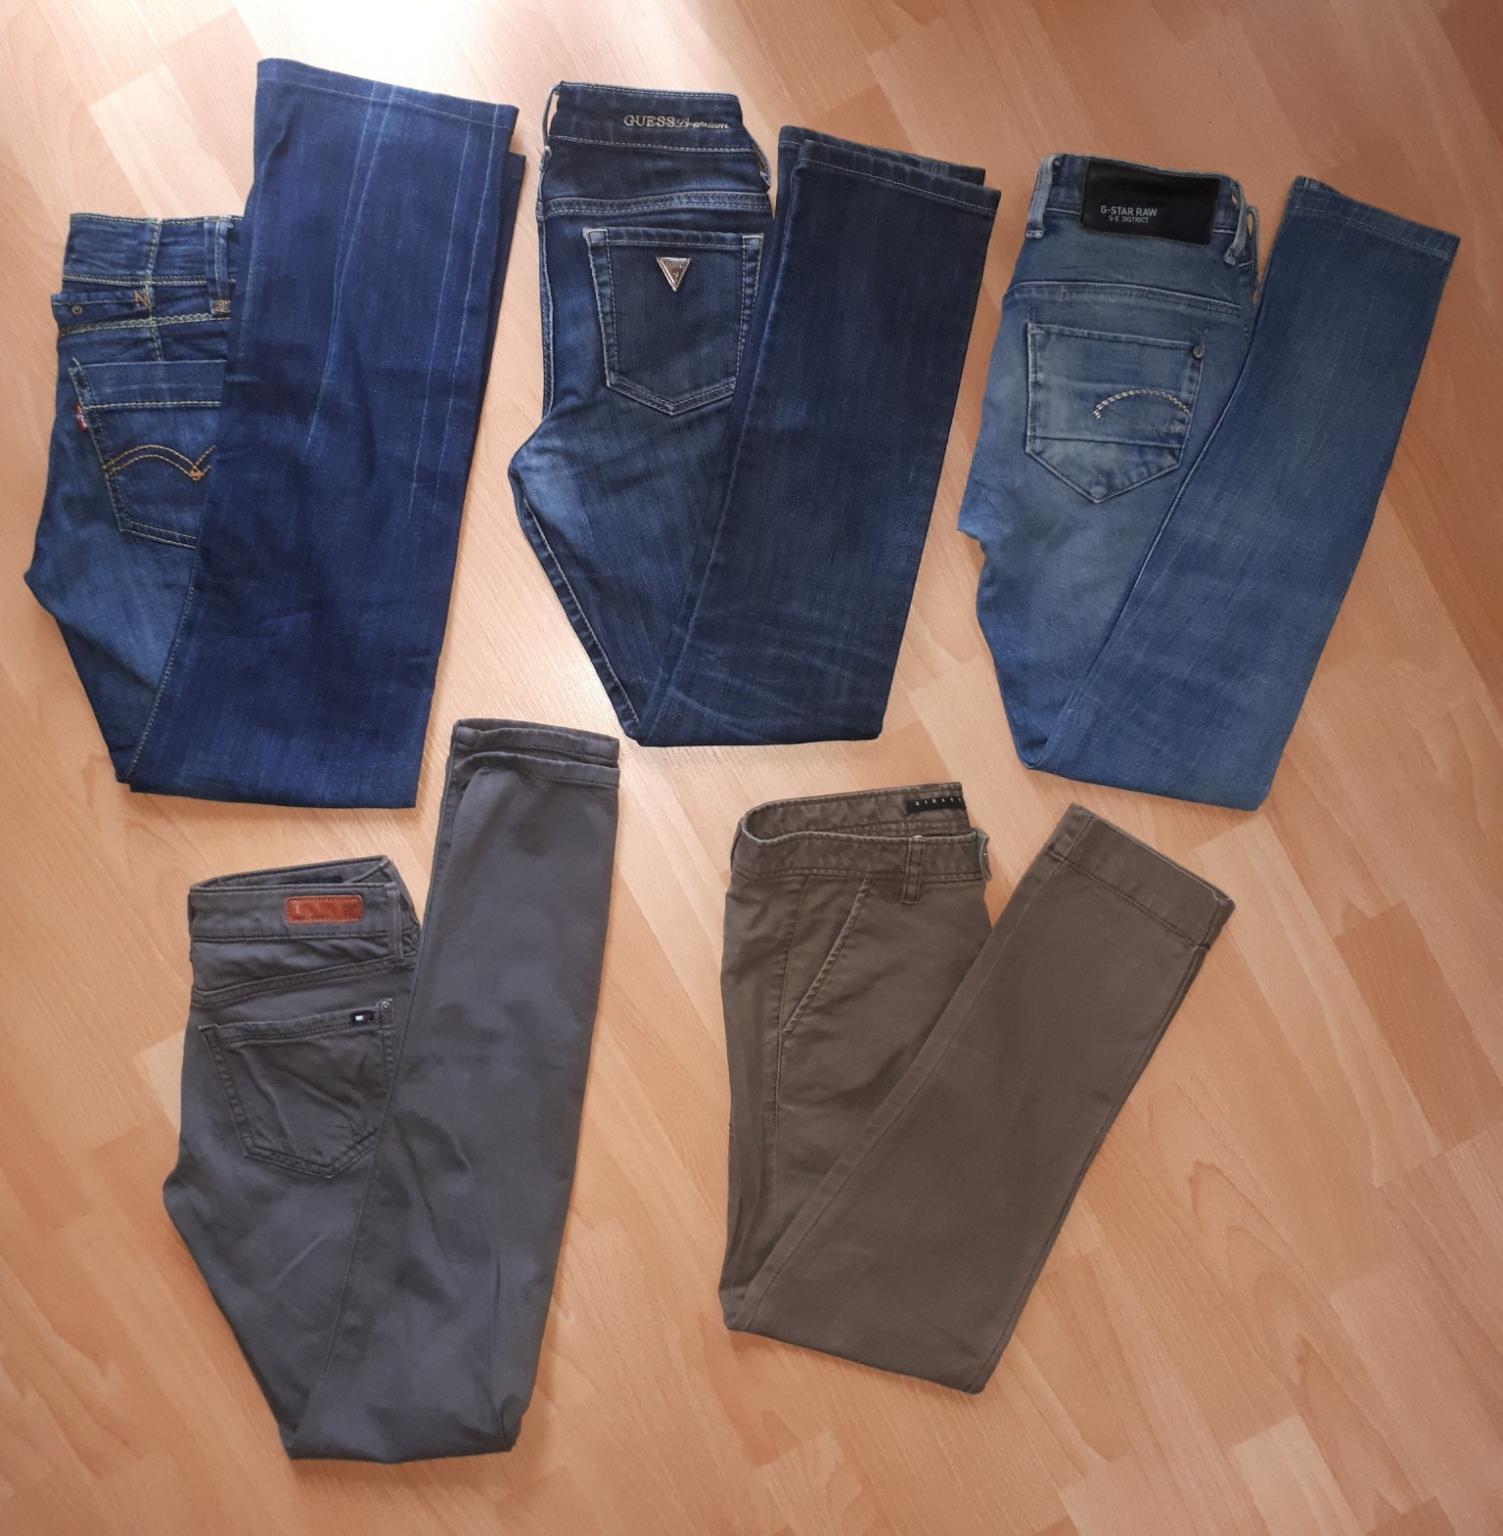 Jeans Damenhose Blau Gr Tommy Hilfiger 7 8 Hose Jeans 26 27 28 29 30 Neu Denim Kleidung Accessoires Pokupec Hr